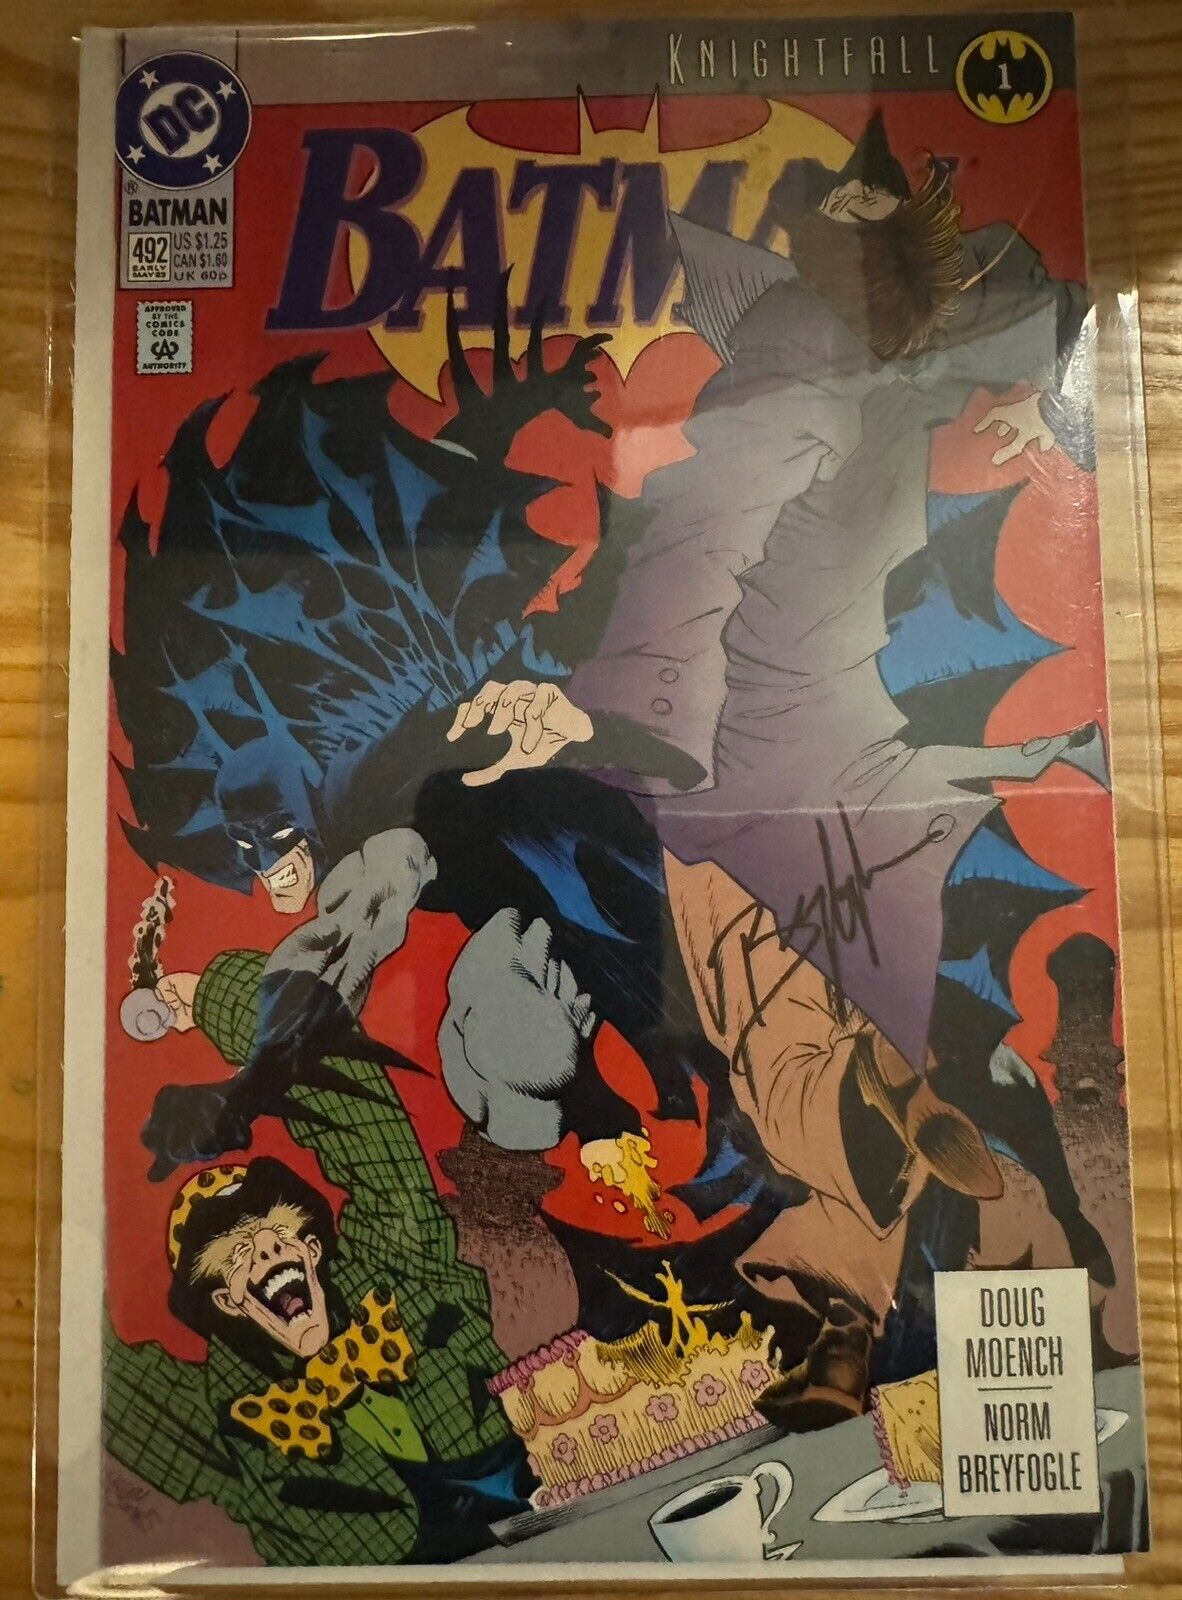 BATMAN # 492 * KNIGHTFALL PART ONE * DC COMICS * -Autographed